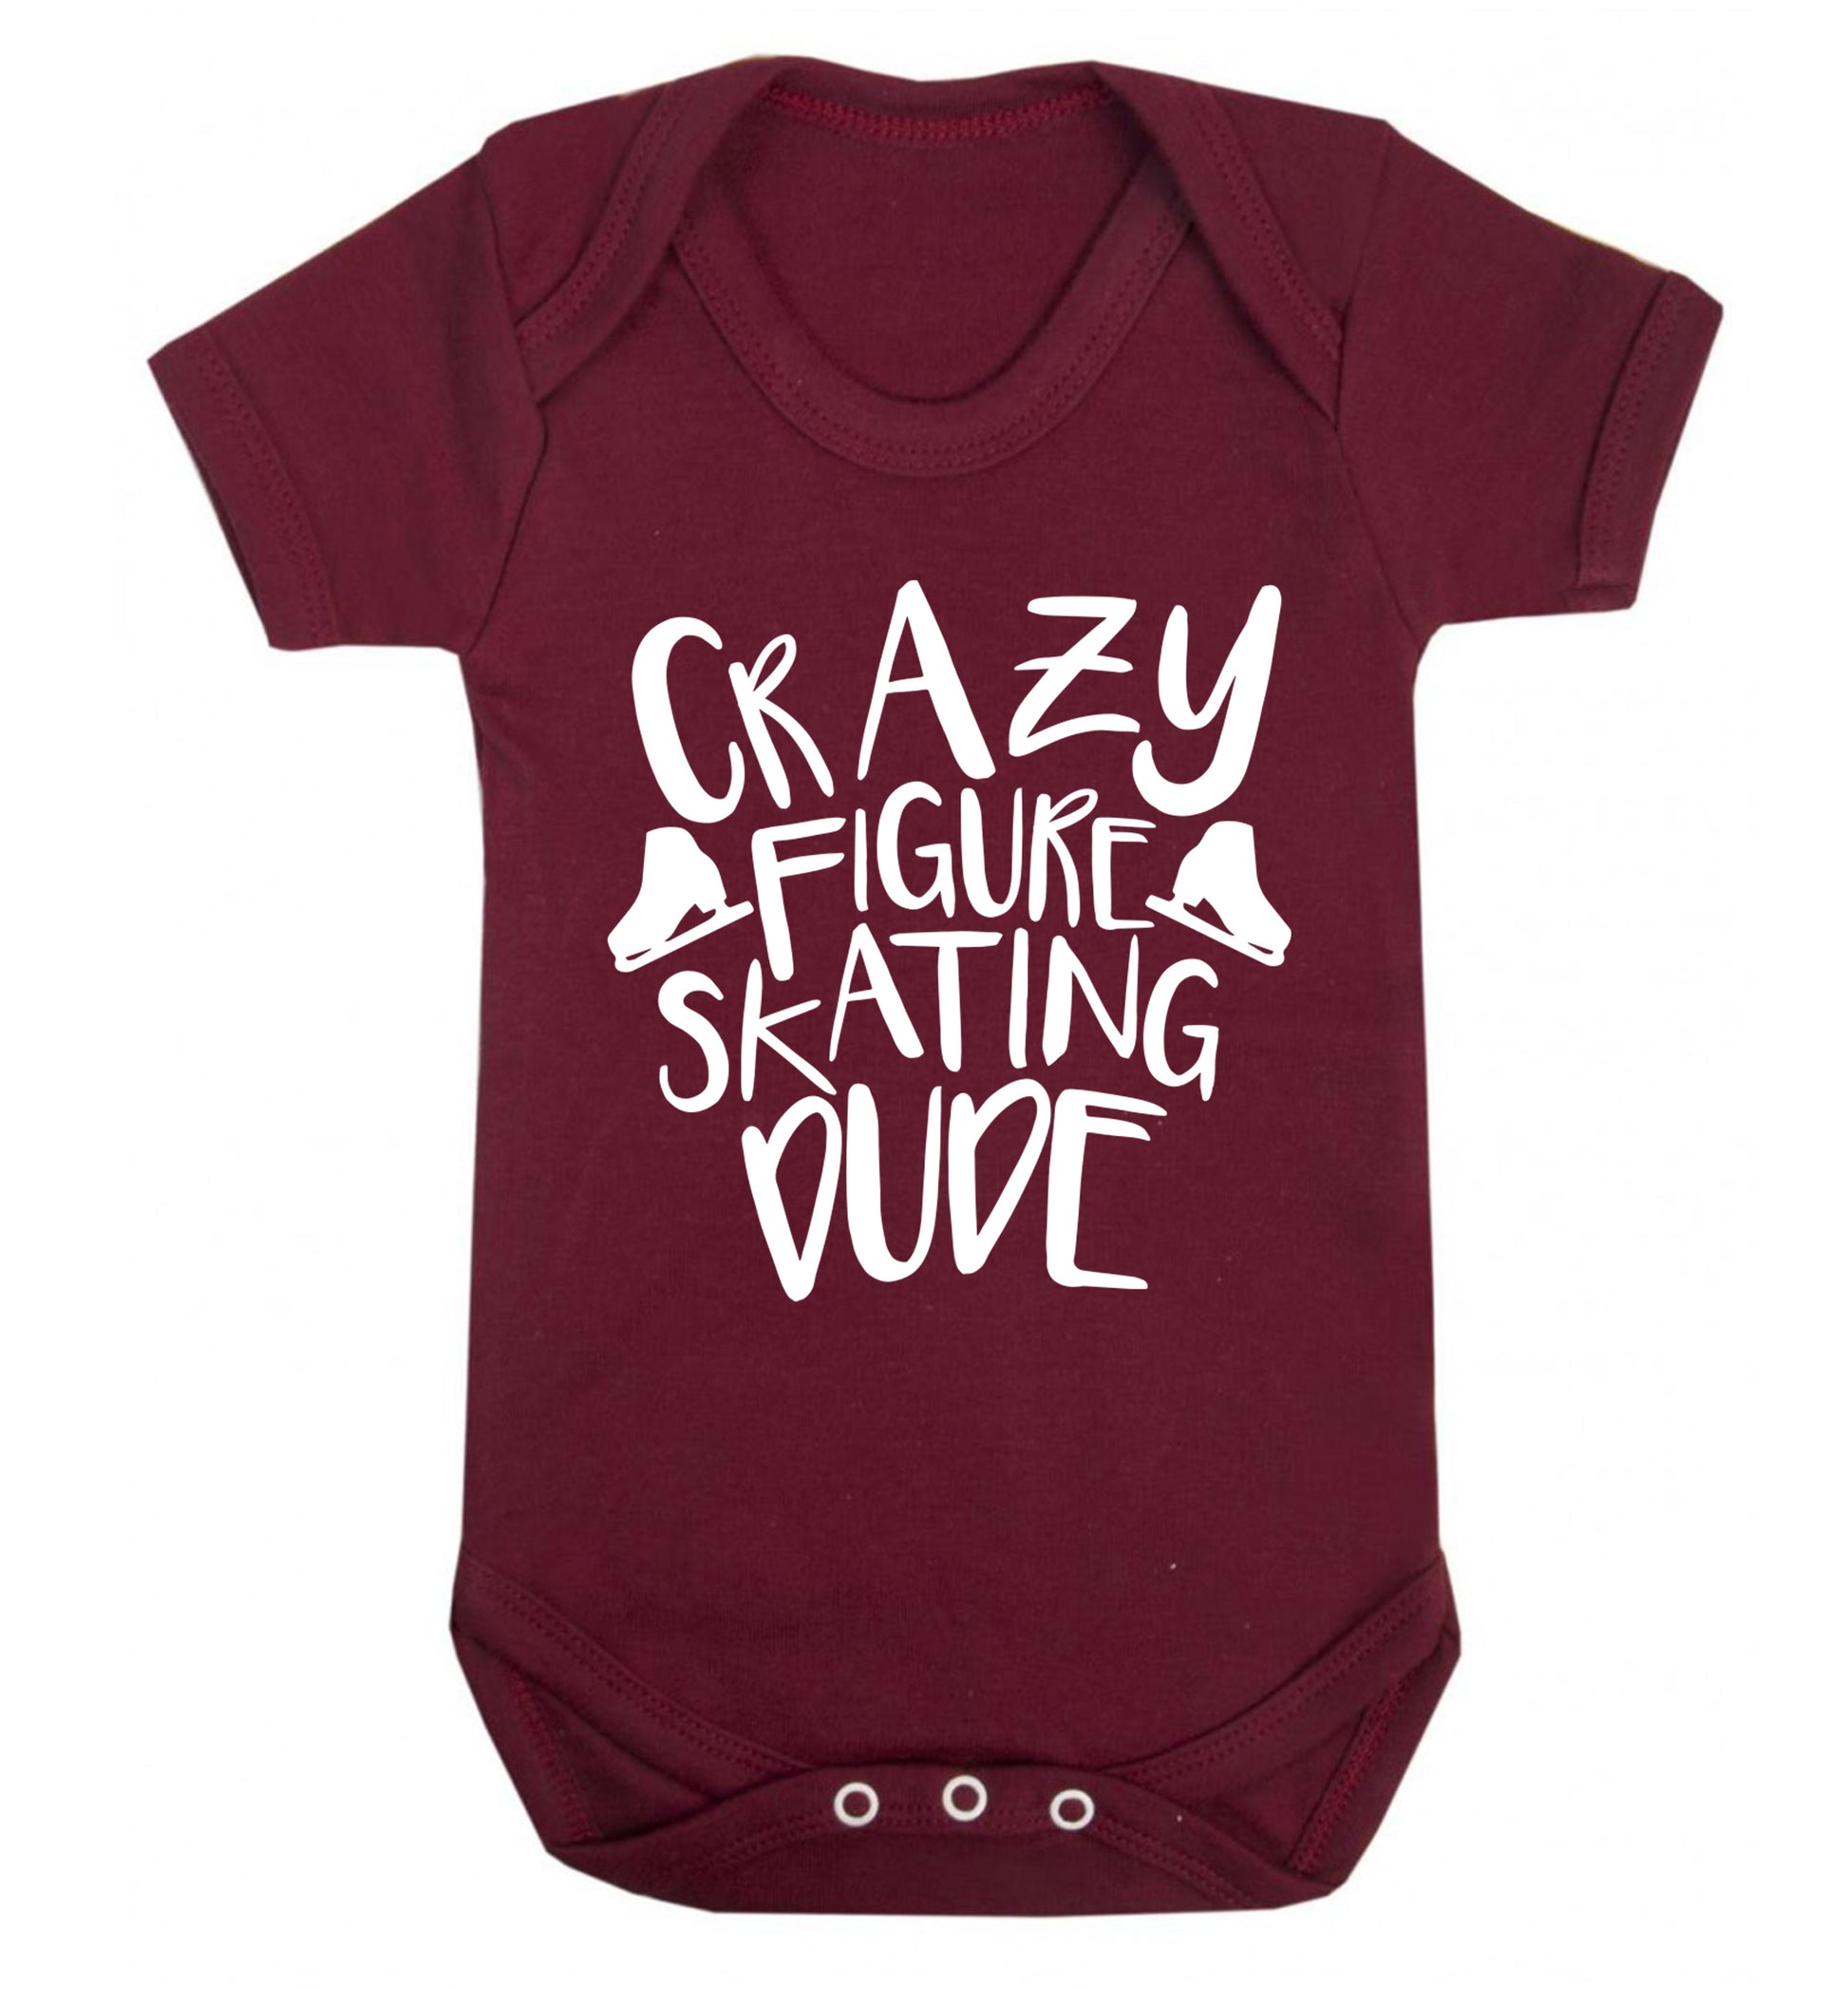 Crazy figure skating dude Baby Vest maroon 18-24 months